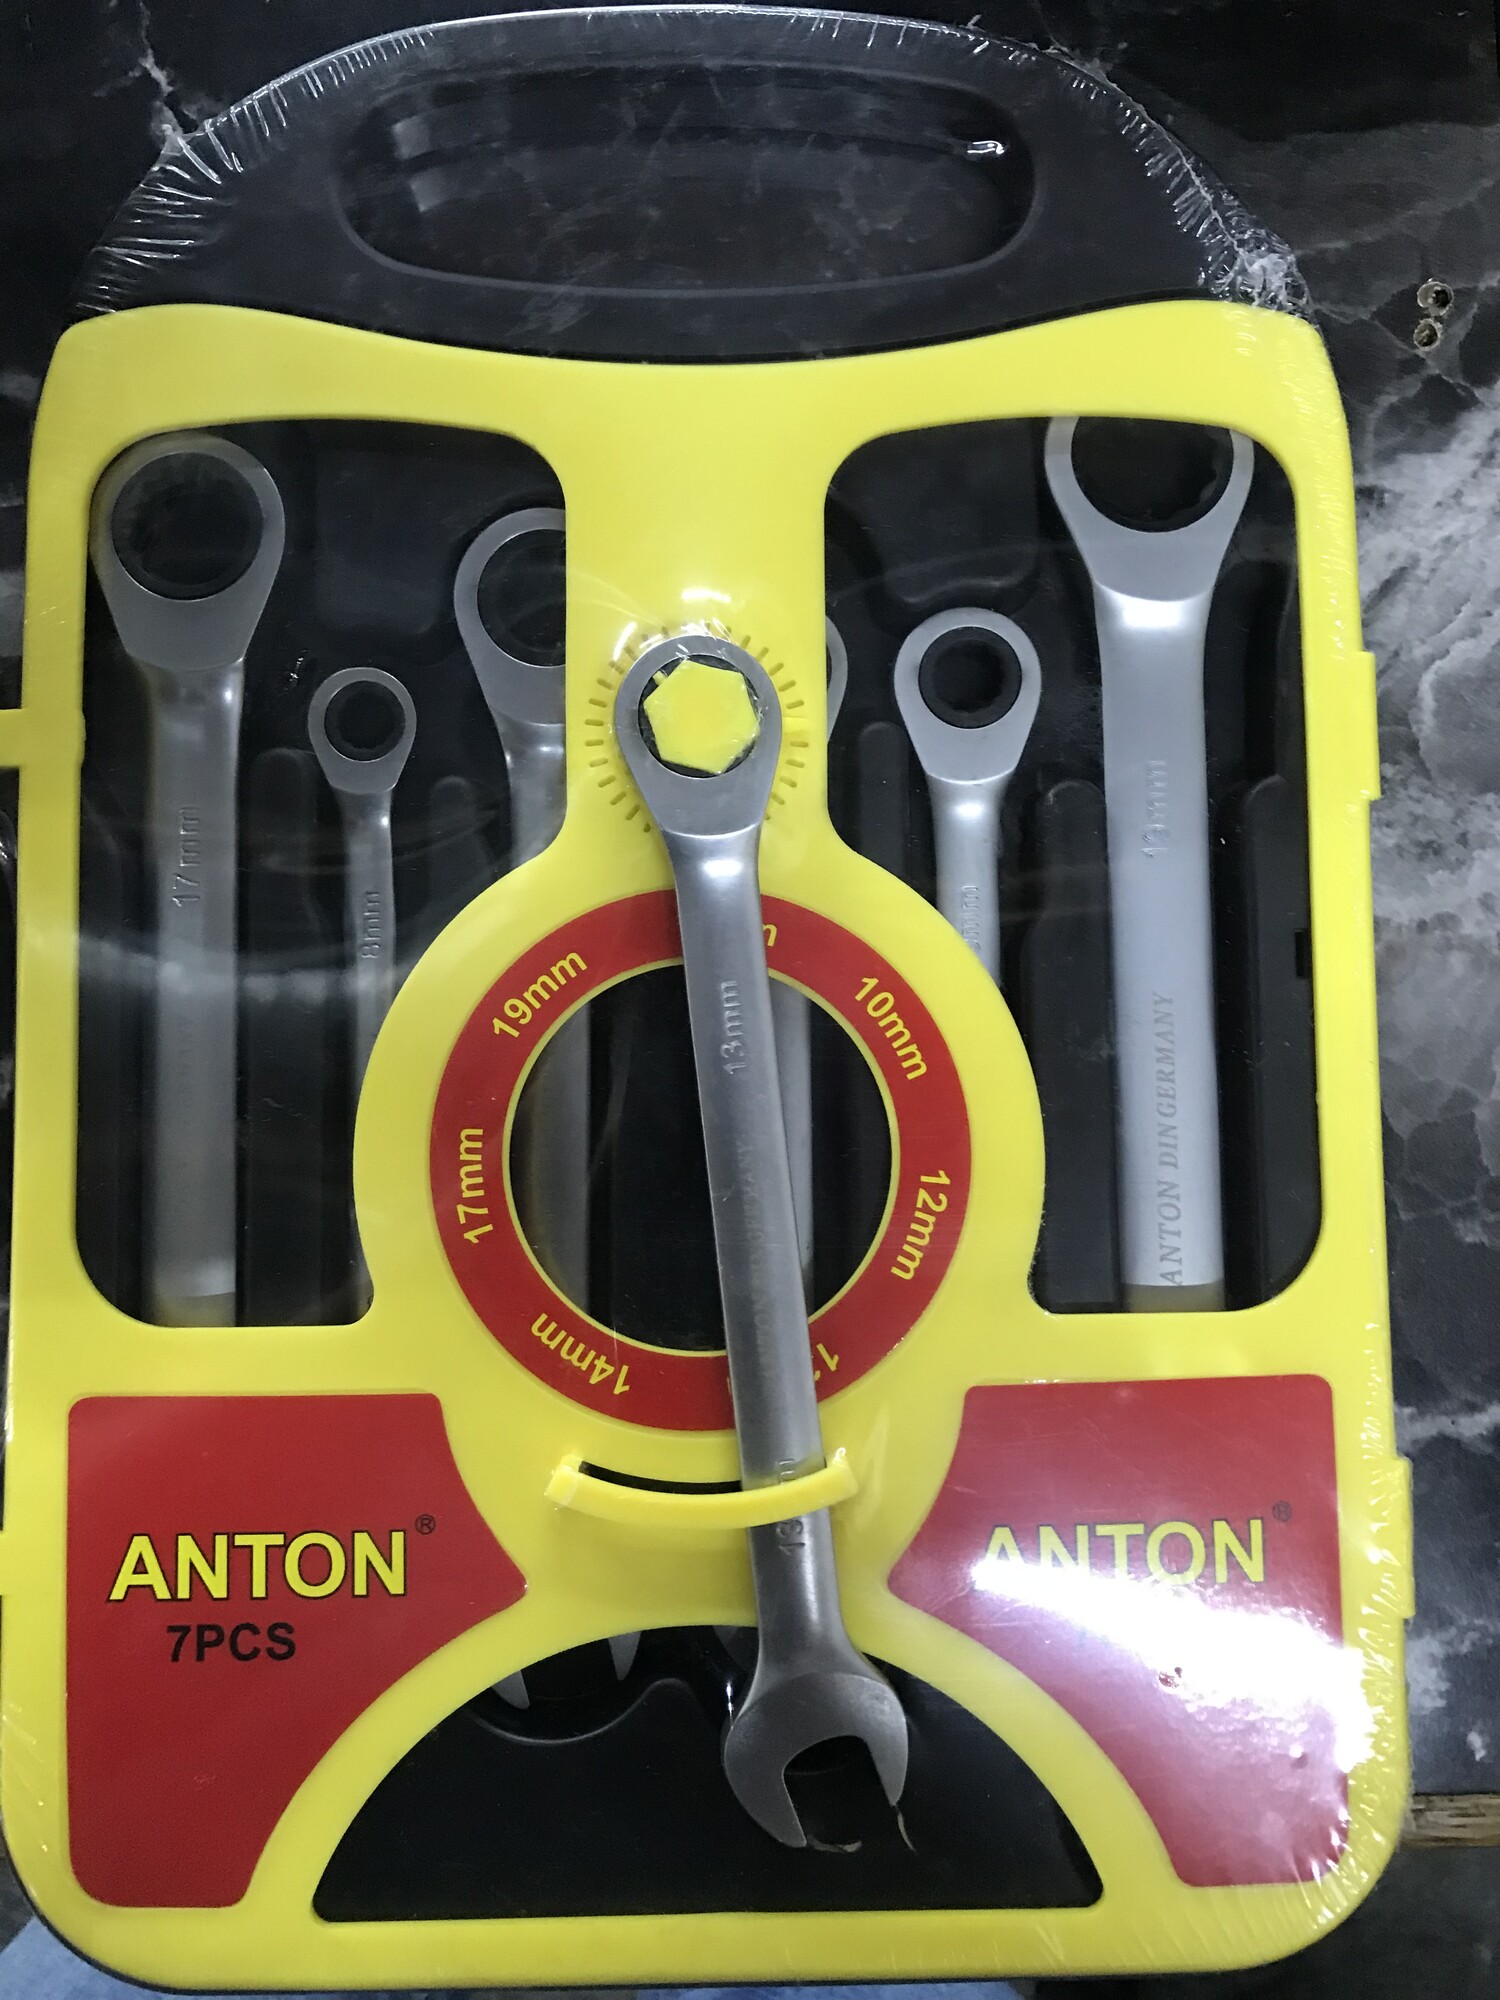 Ratcheting Wrench Set, Anton, 7pc
Metric 8mm,10mm,12mm,13mm,14mm,17mm,19mm